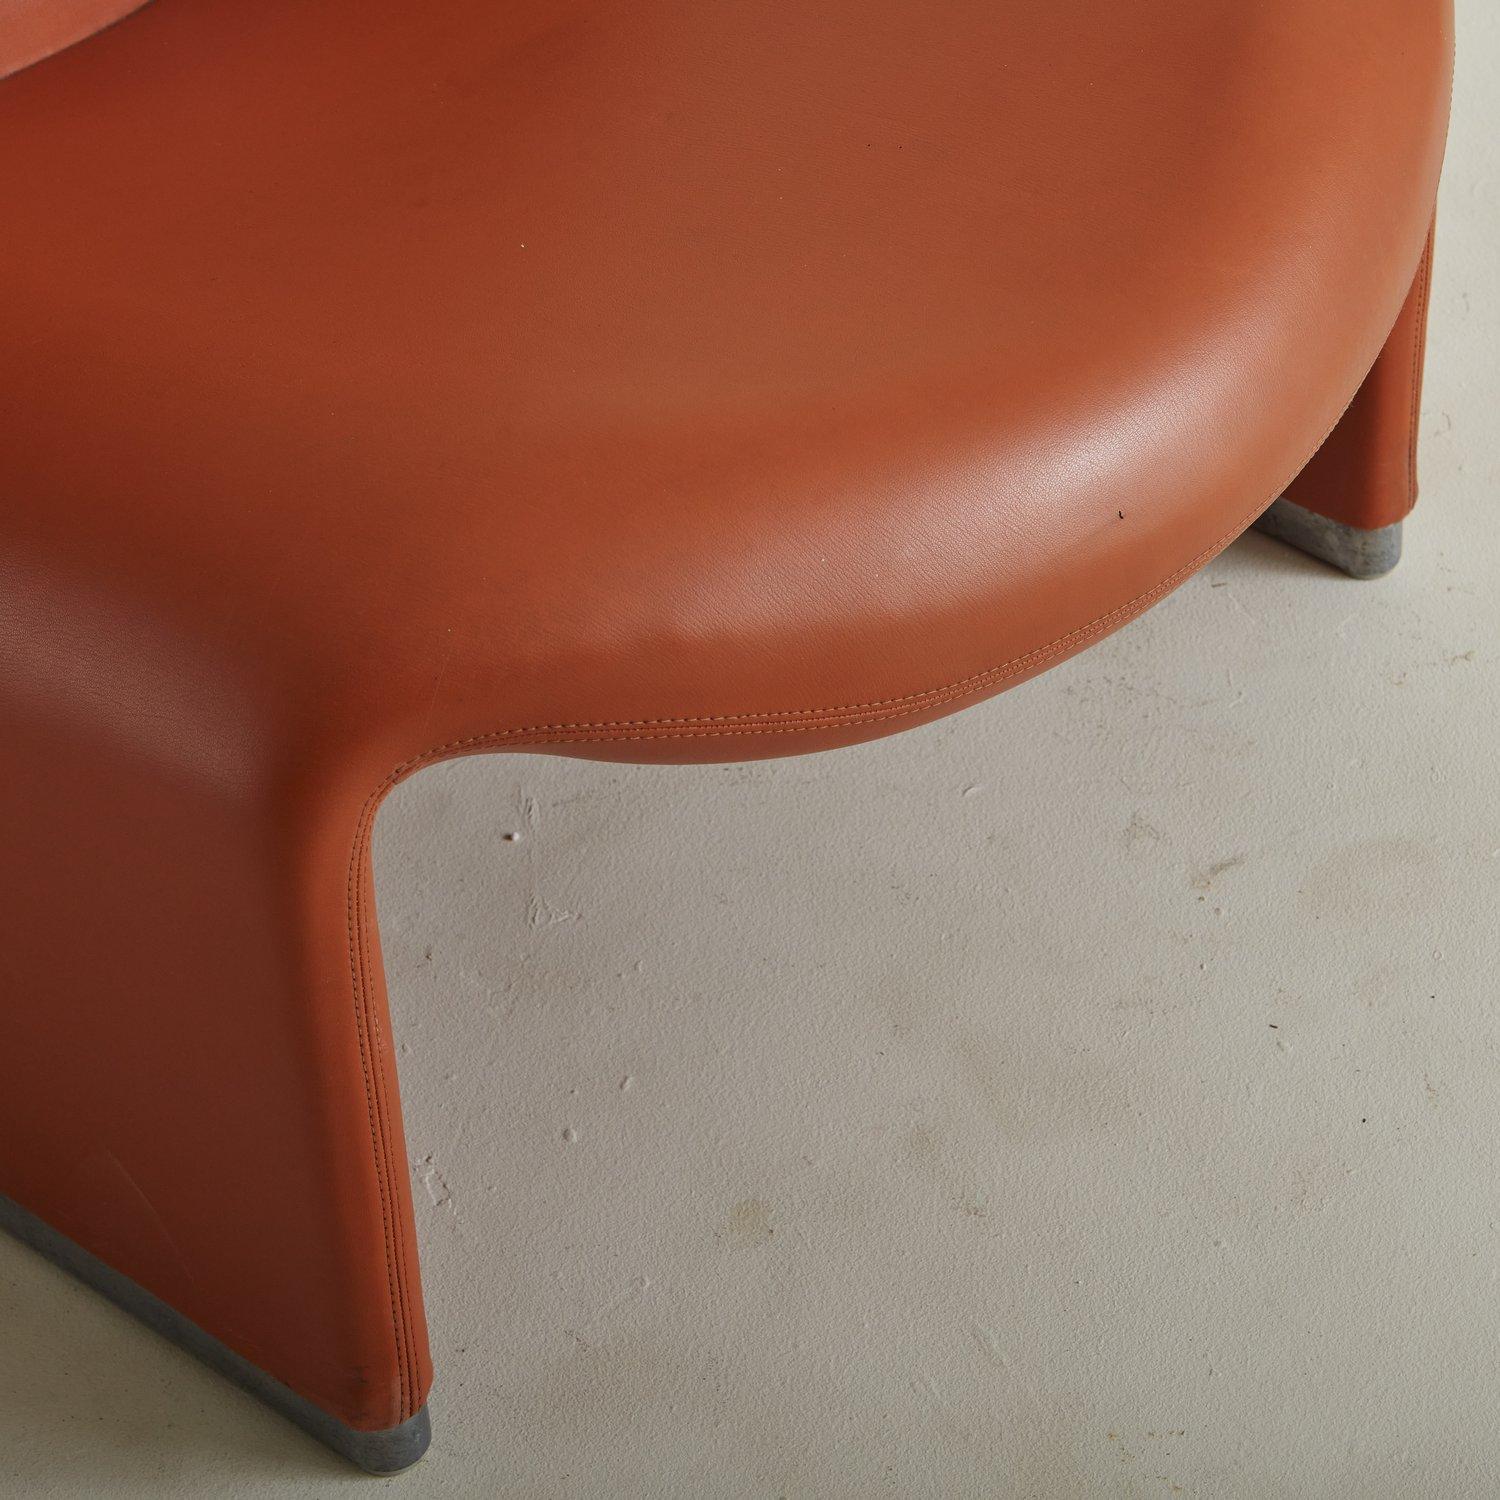 Italian Alky Chair by Giancarlo Piretti for Castelli, 1969